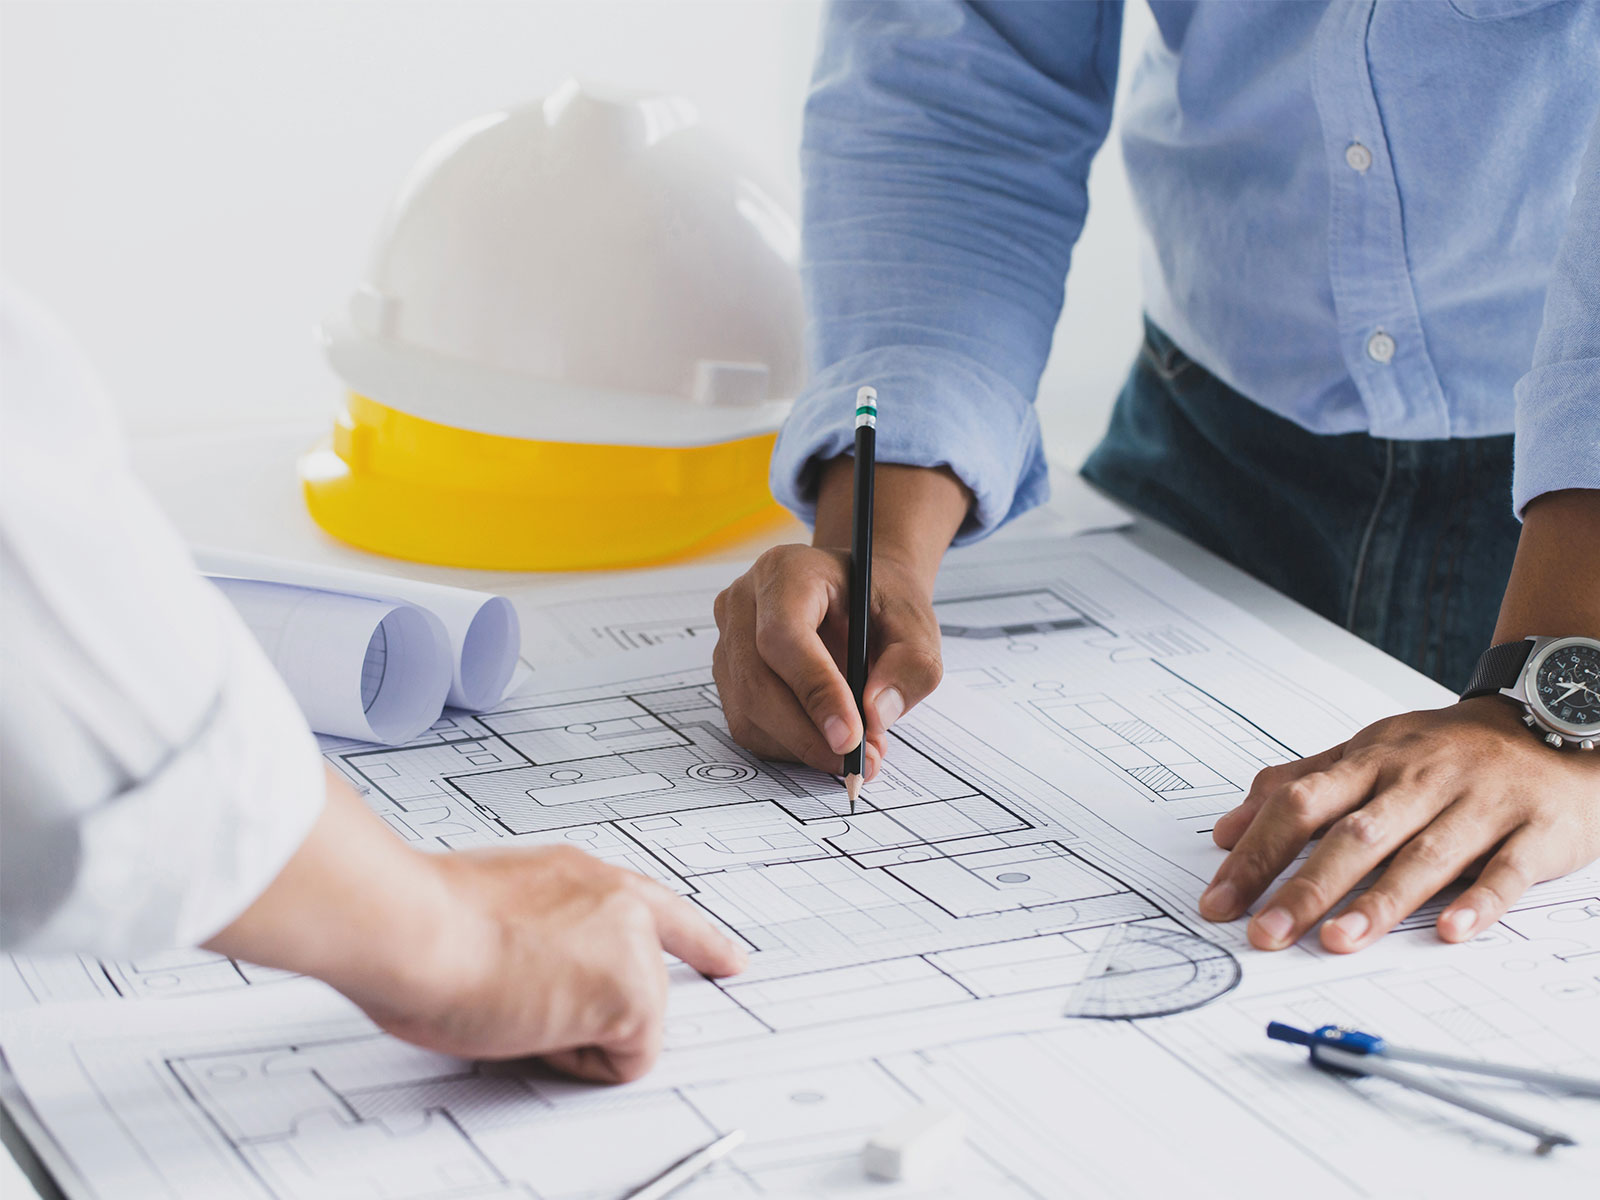 Project Management and designers work on blueprints together.